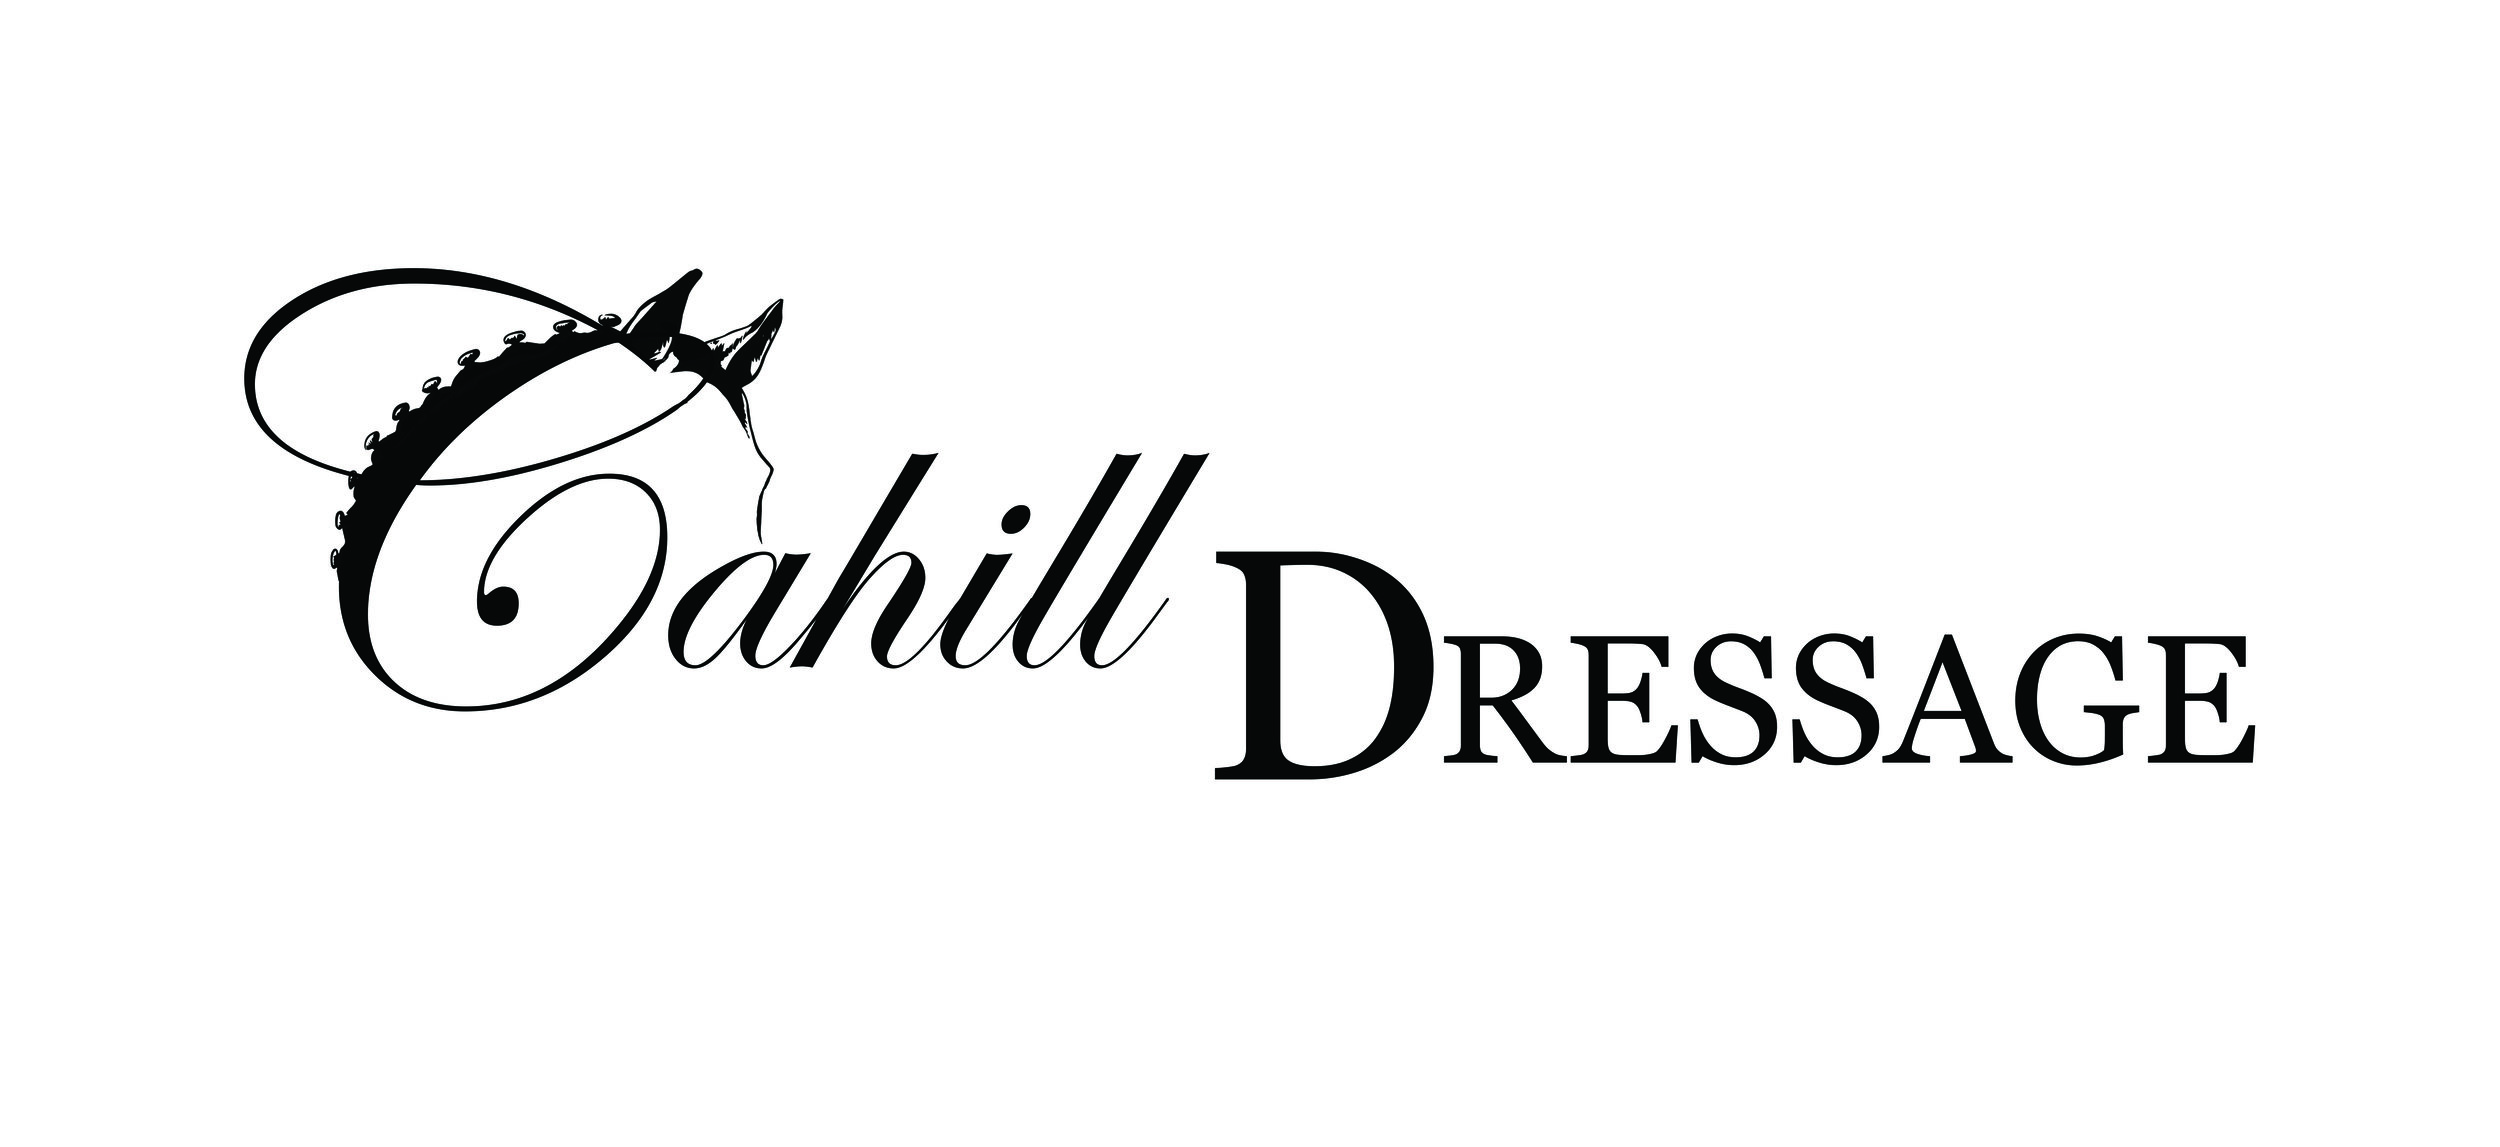 Cahill Dressage